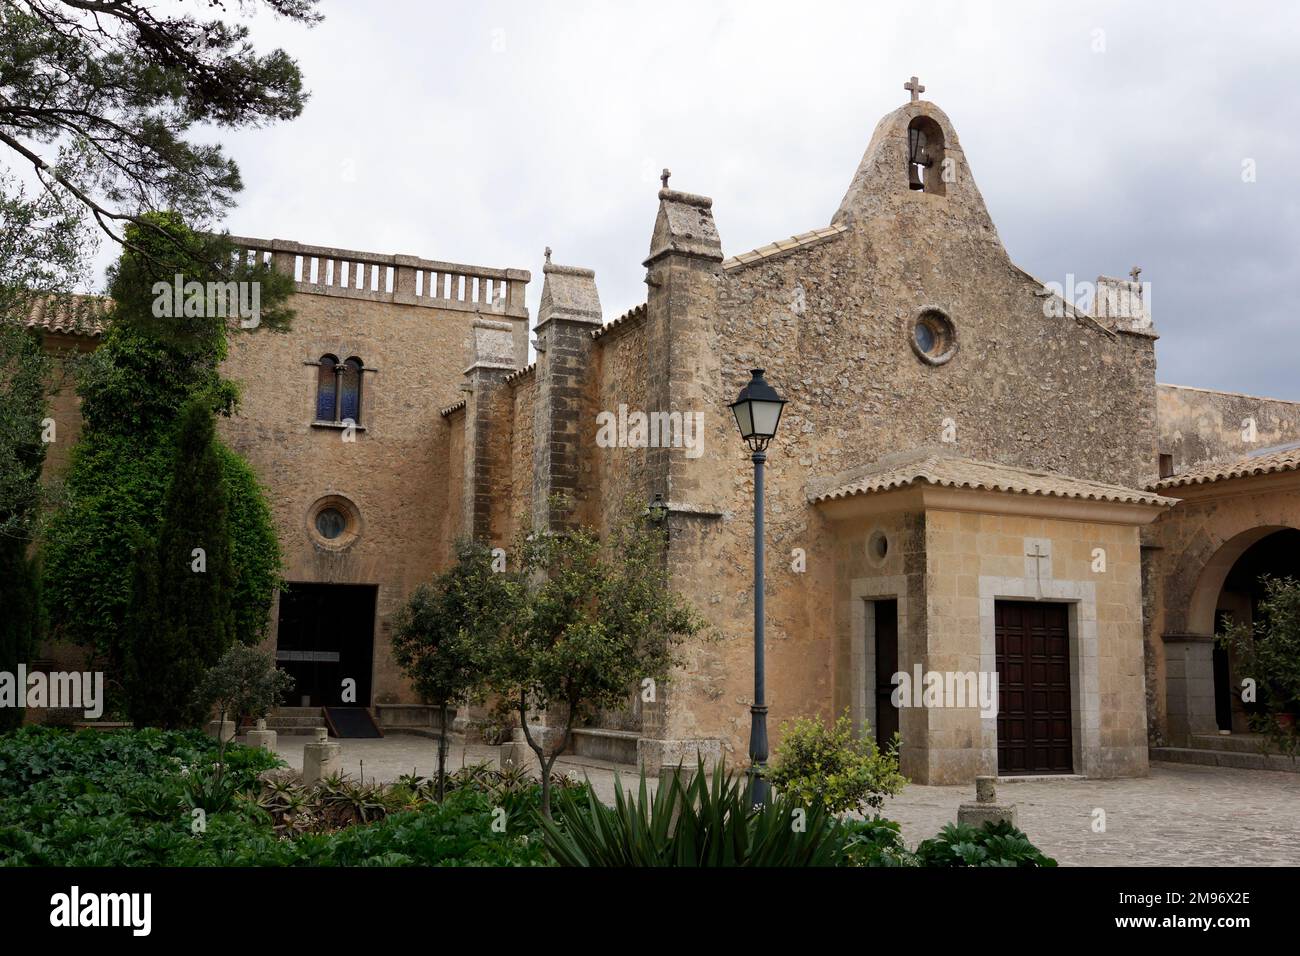 Algaloa, Mallorca, Spain. The monastery Santuari de Nostra Senyora de Cura, located on the top of Puig de Randa on the island of Mallorca at a height of 543m between the municipalities of Algaida and Llucmajor. Stock Photo